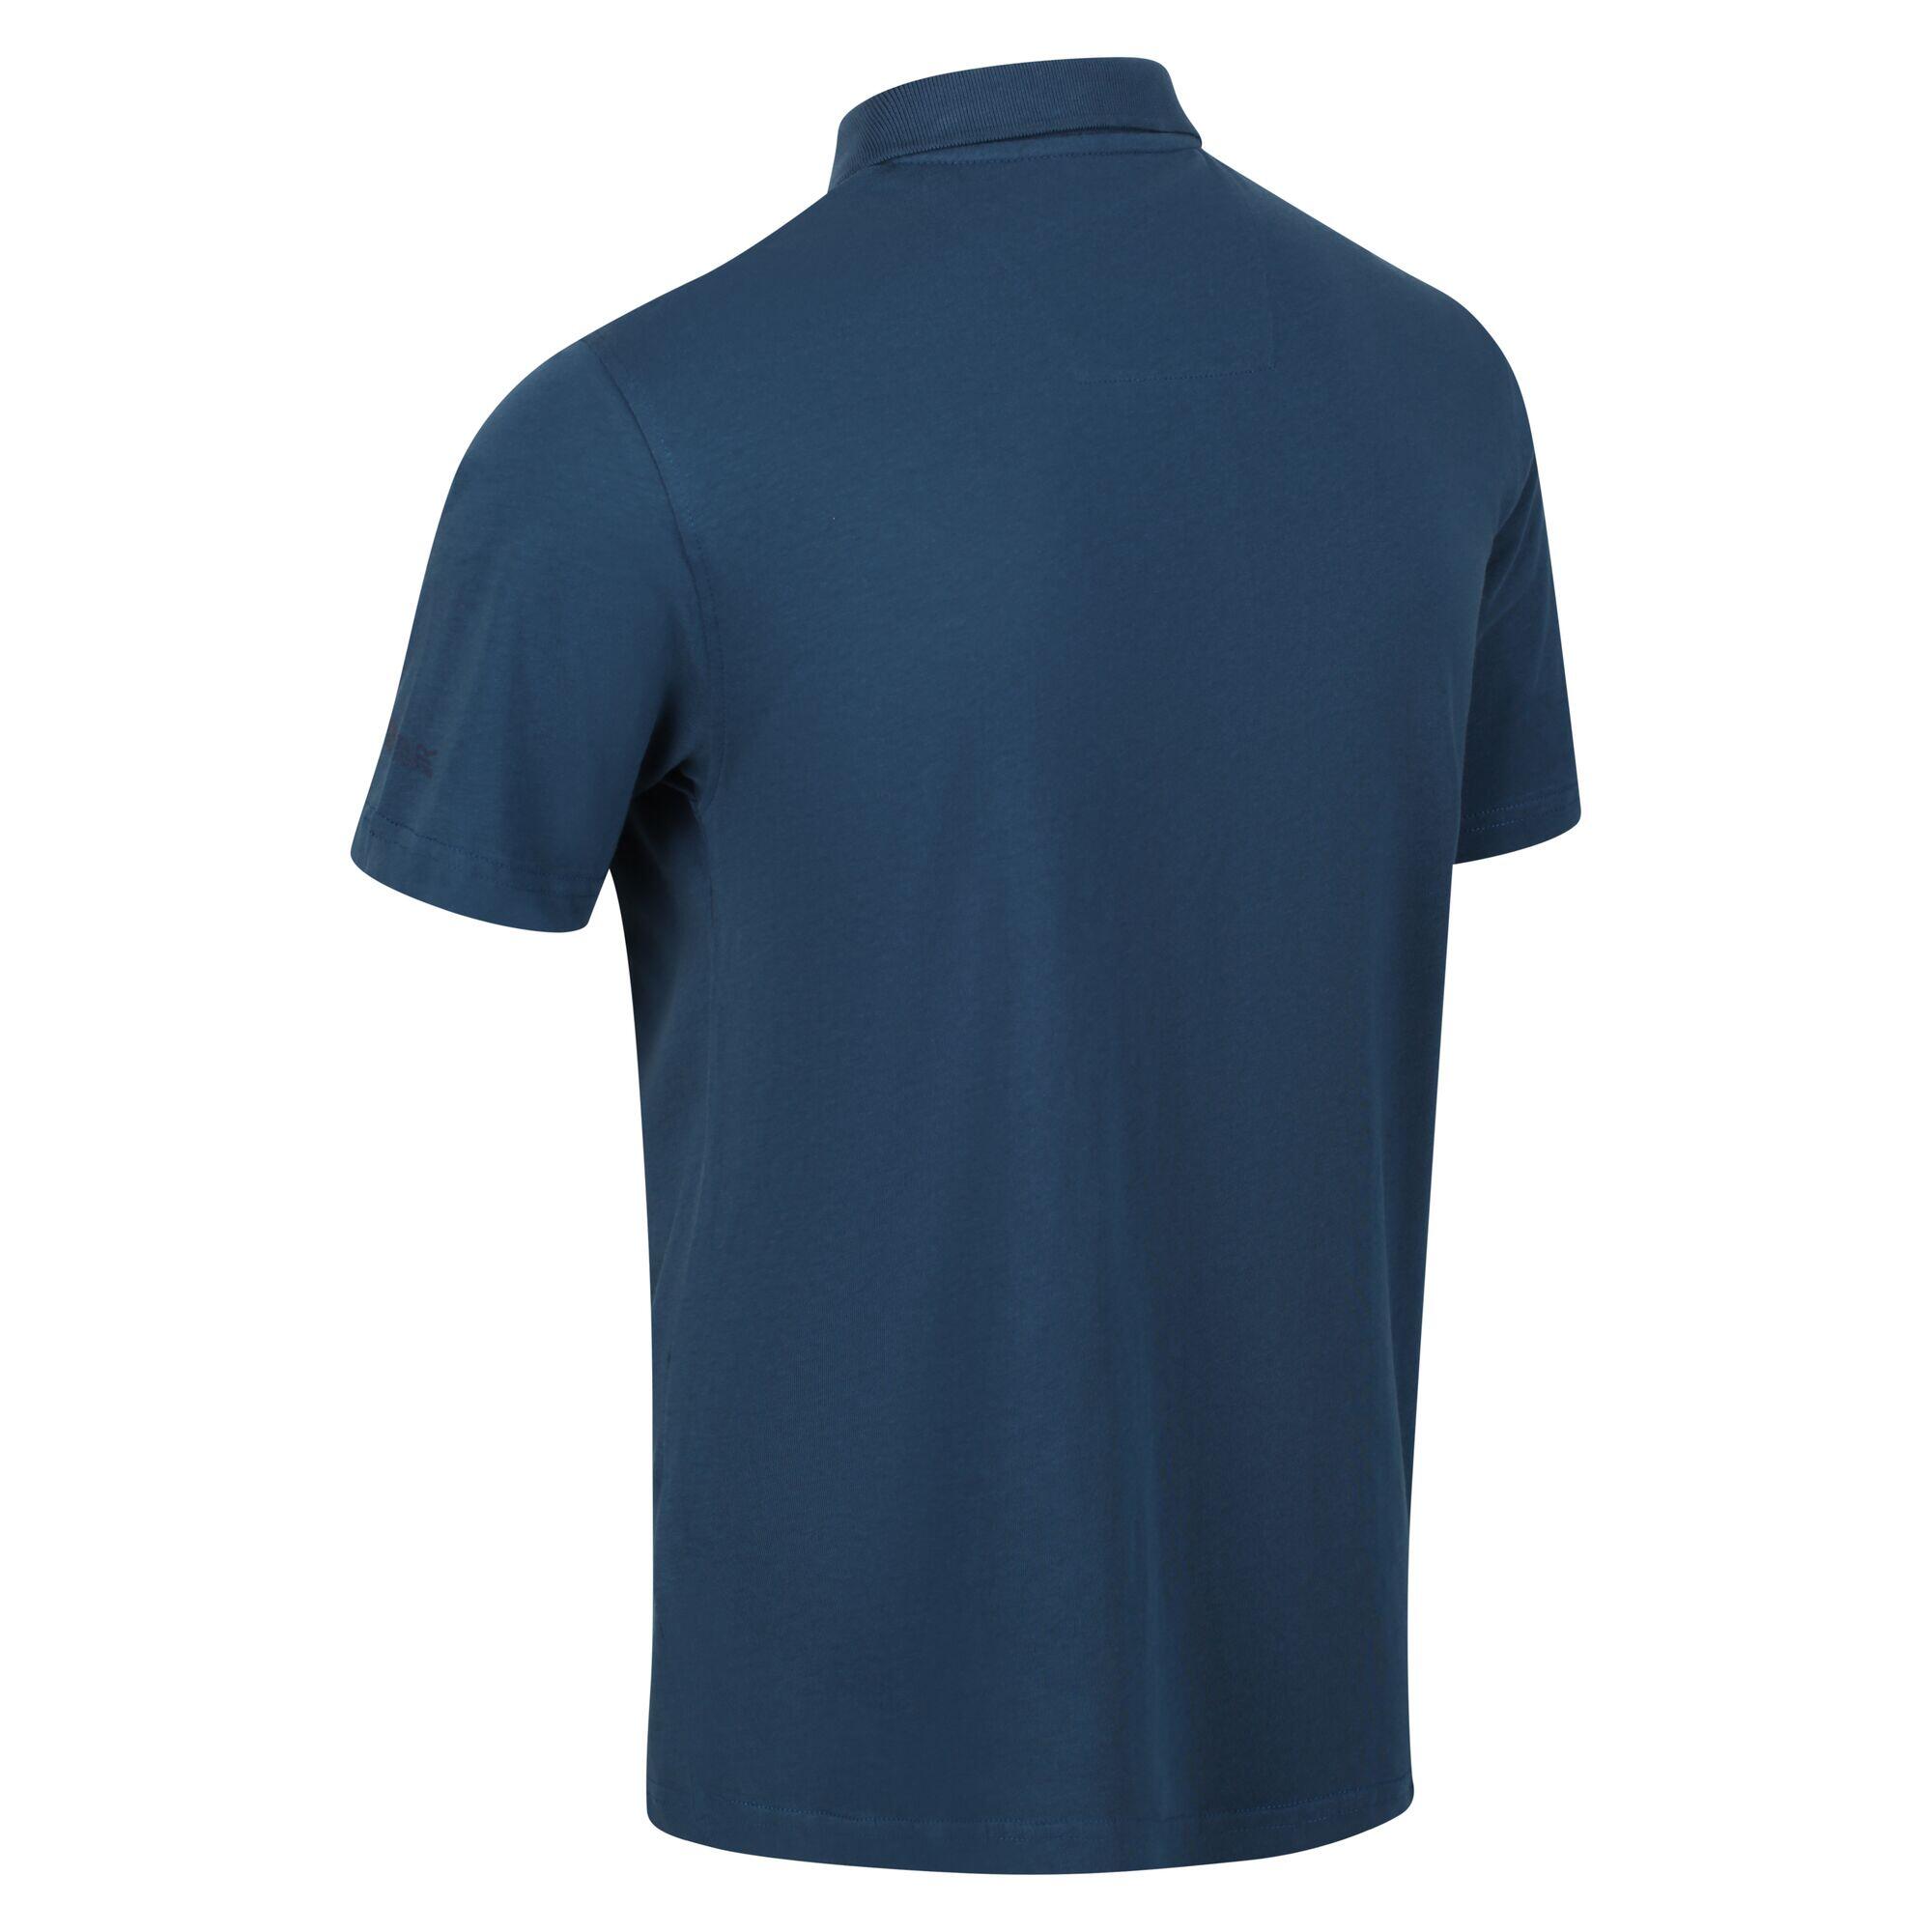 Sinton Men's Fitness Short Sleeve Polo Shirt - Moonlight Denim 5/5